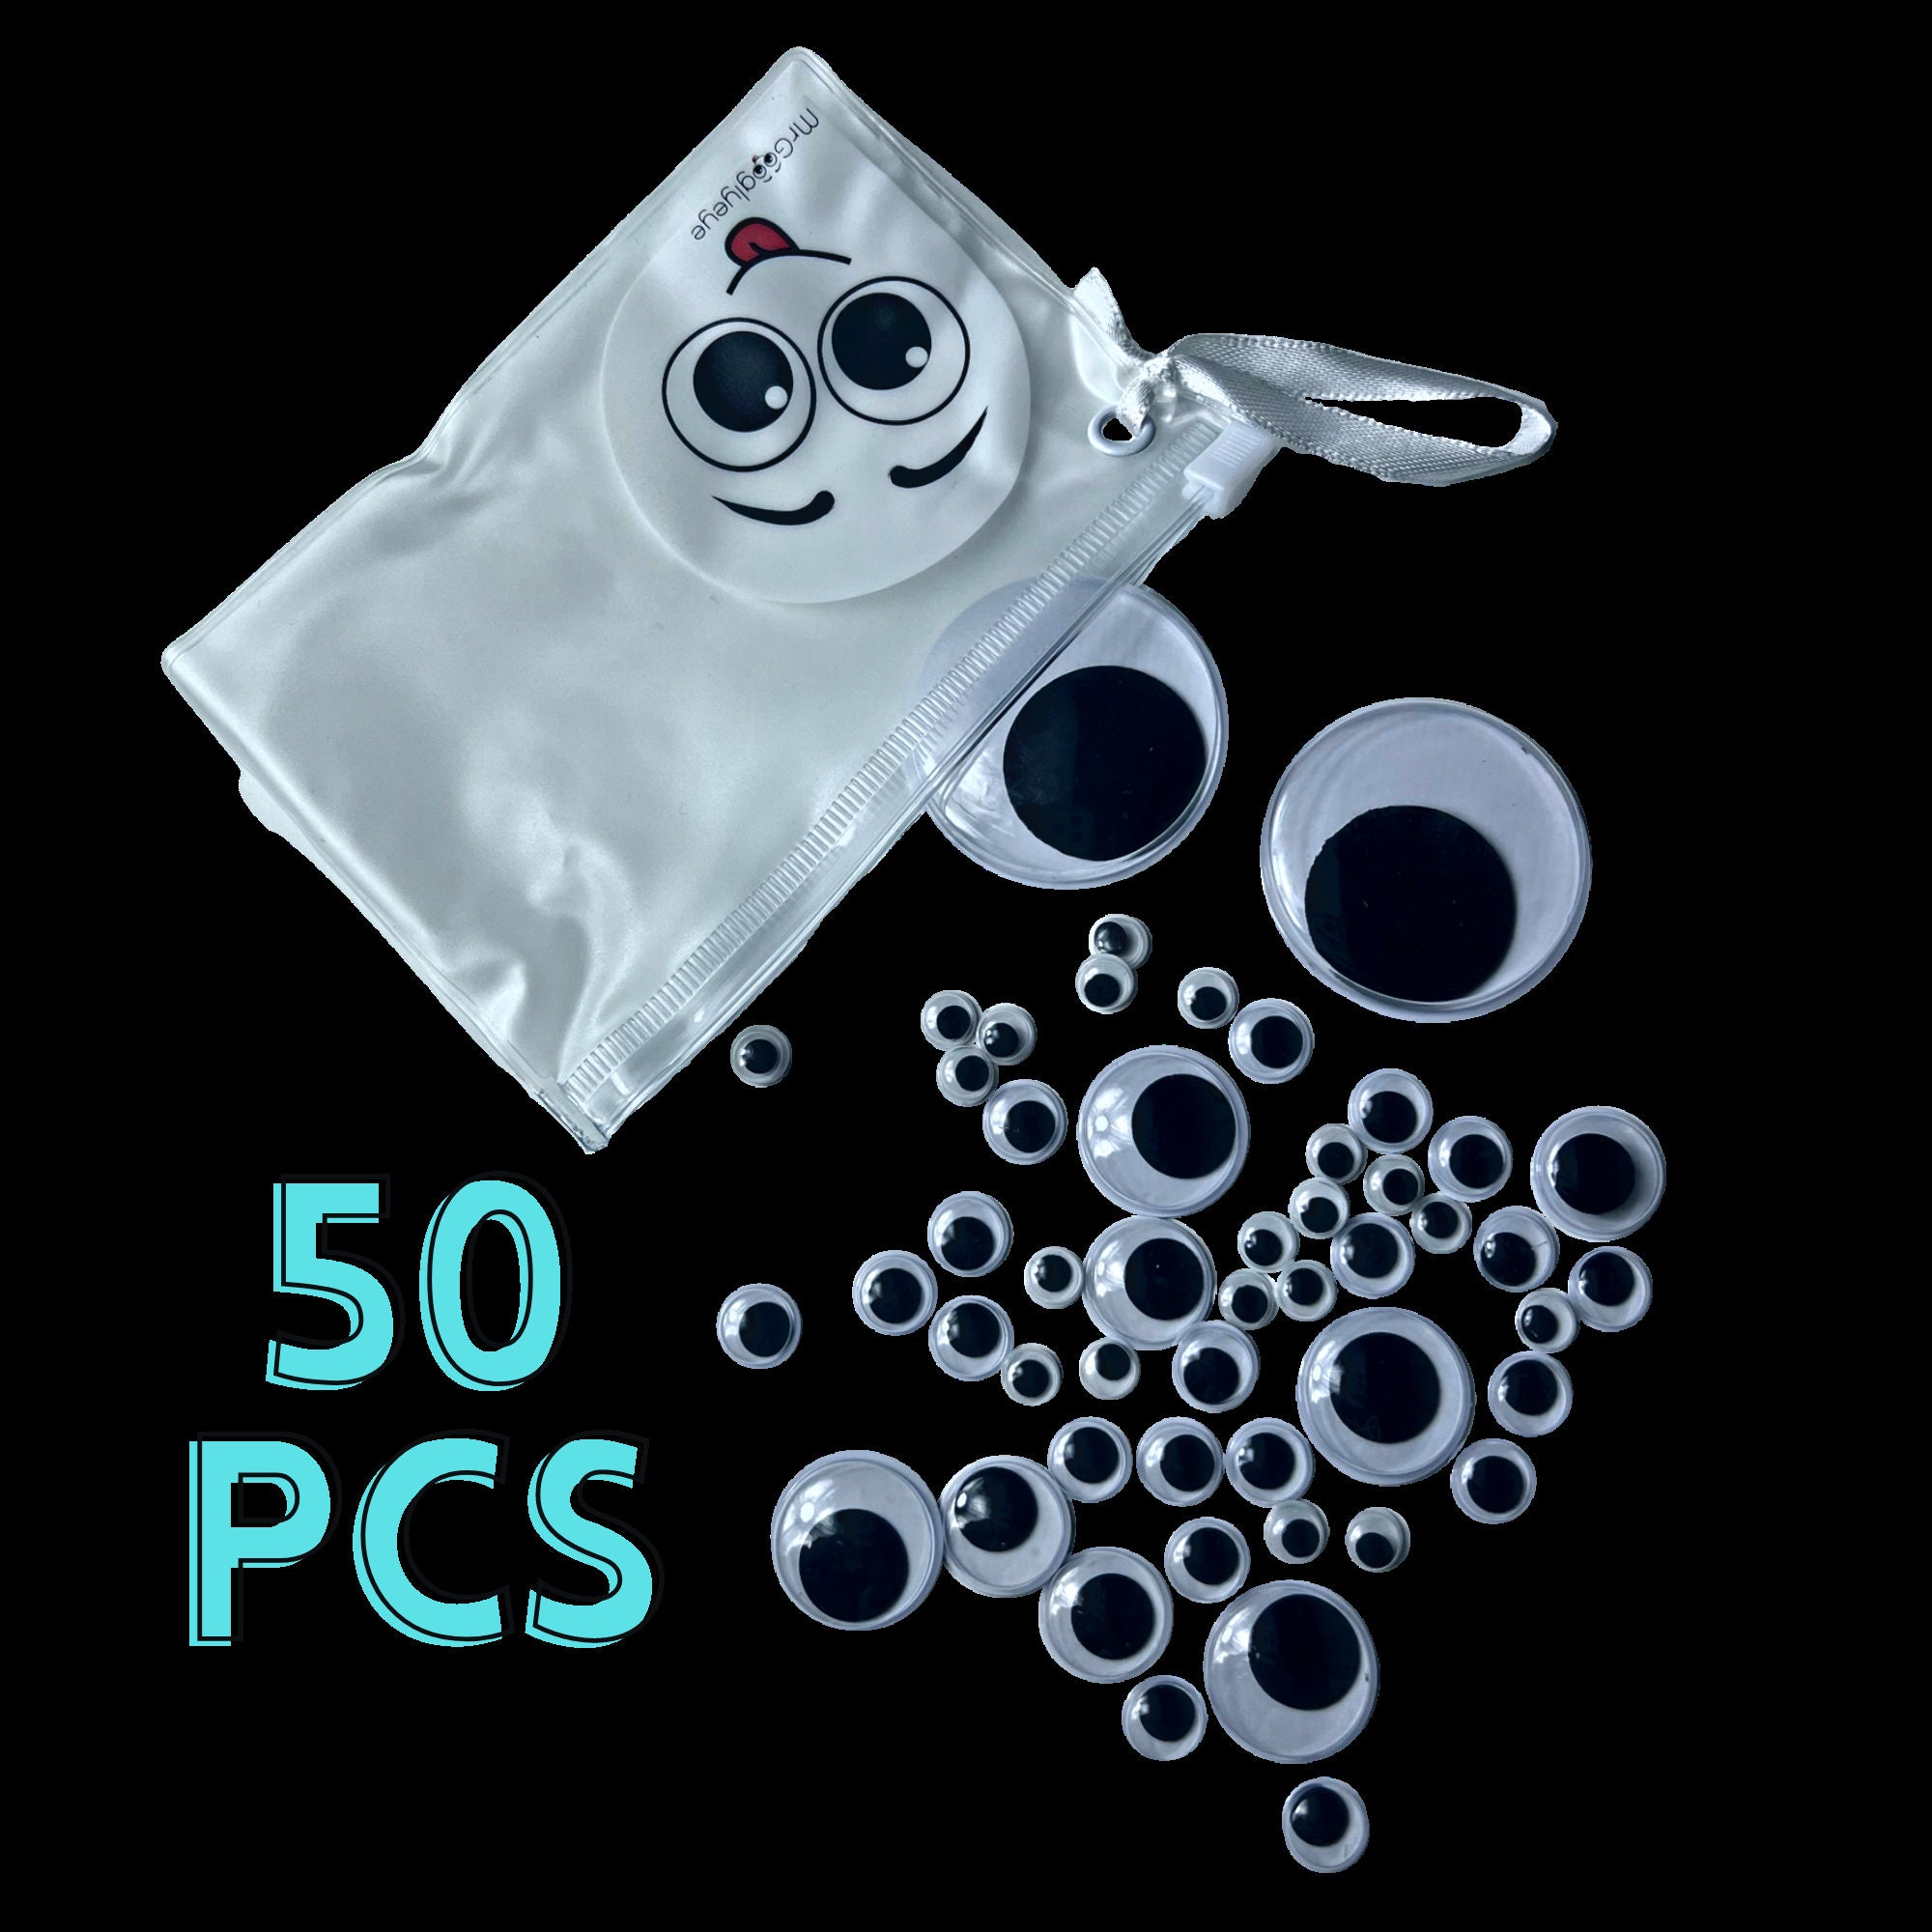 High-quality Googly Eyes Set in Zip Bag 50pcs 7-40mm Eco-friendly & Self- adhesive DIY Crafts Decorations by mrgooglyeye 